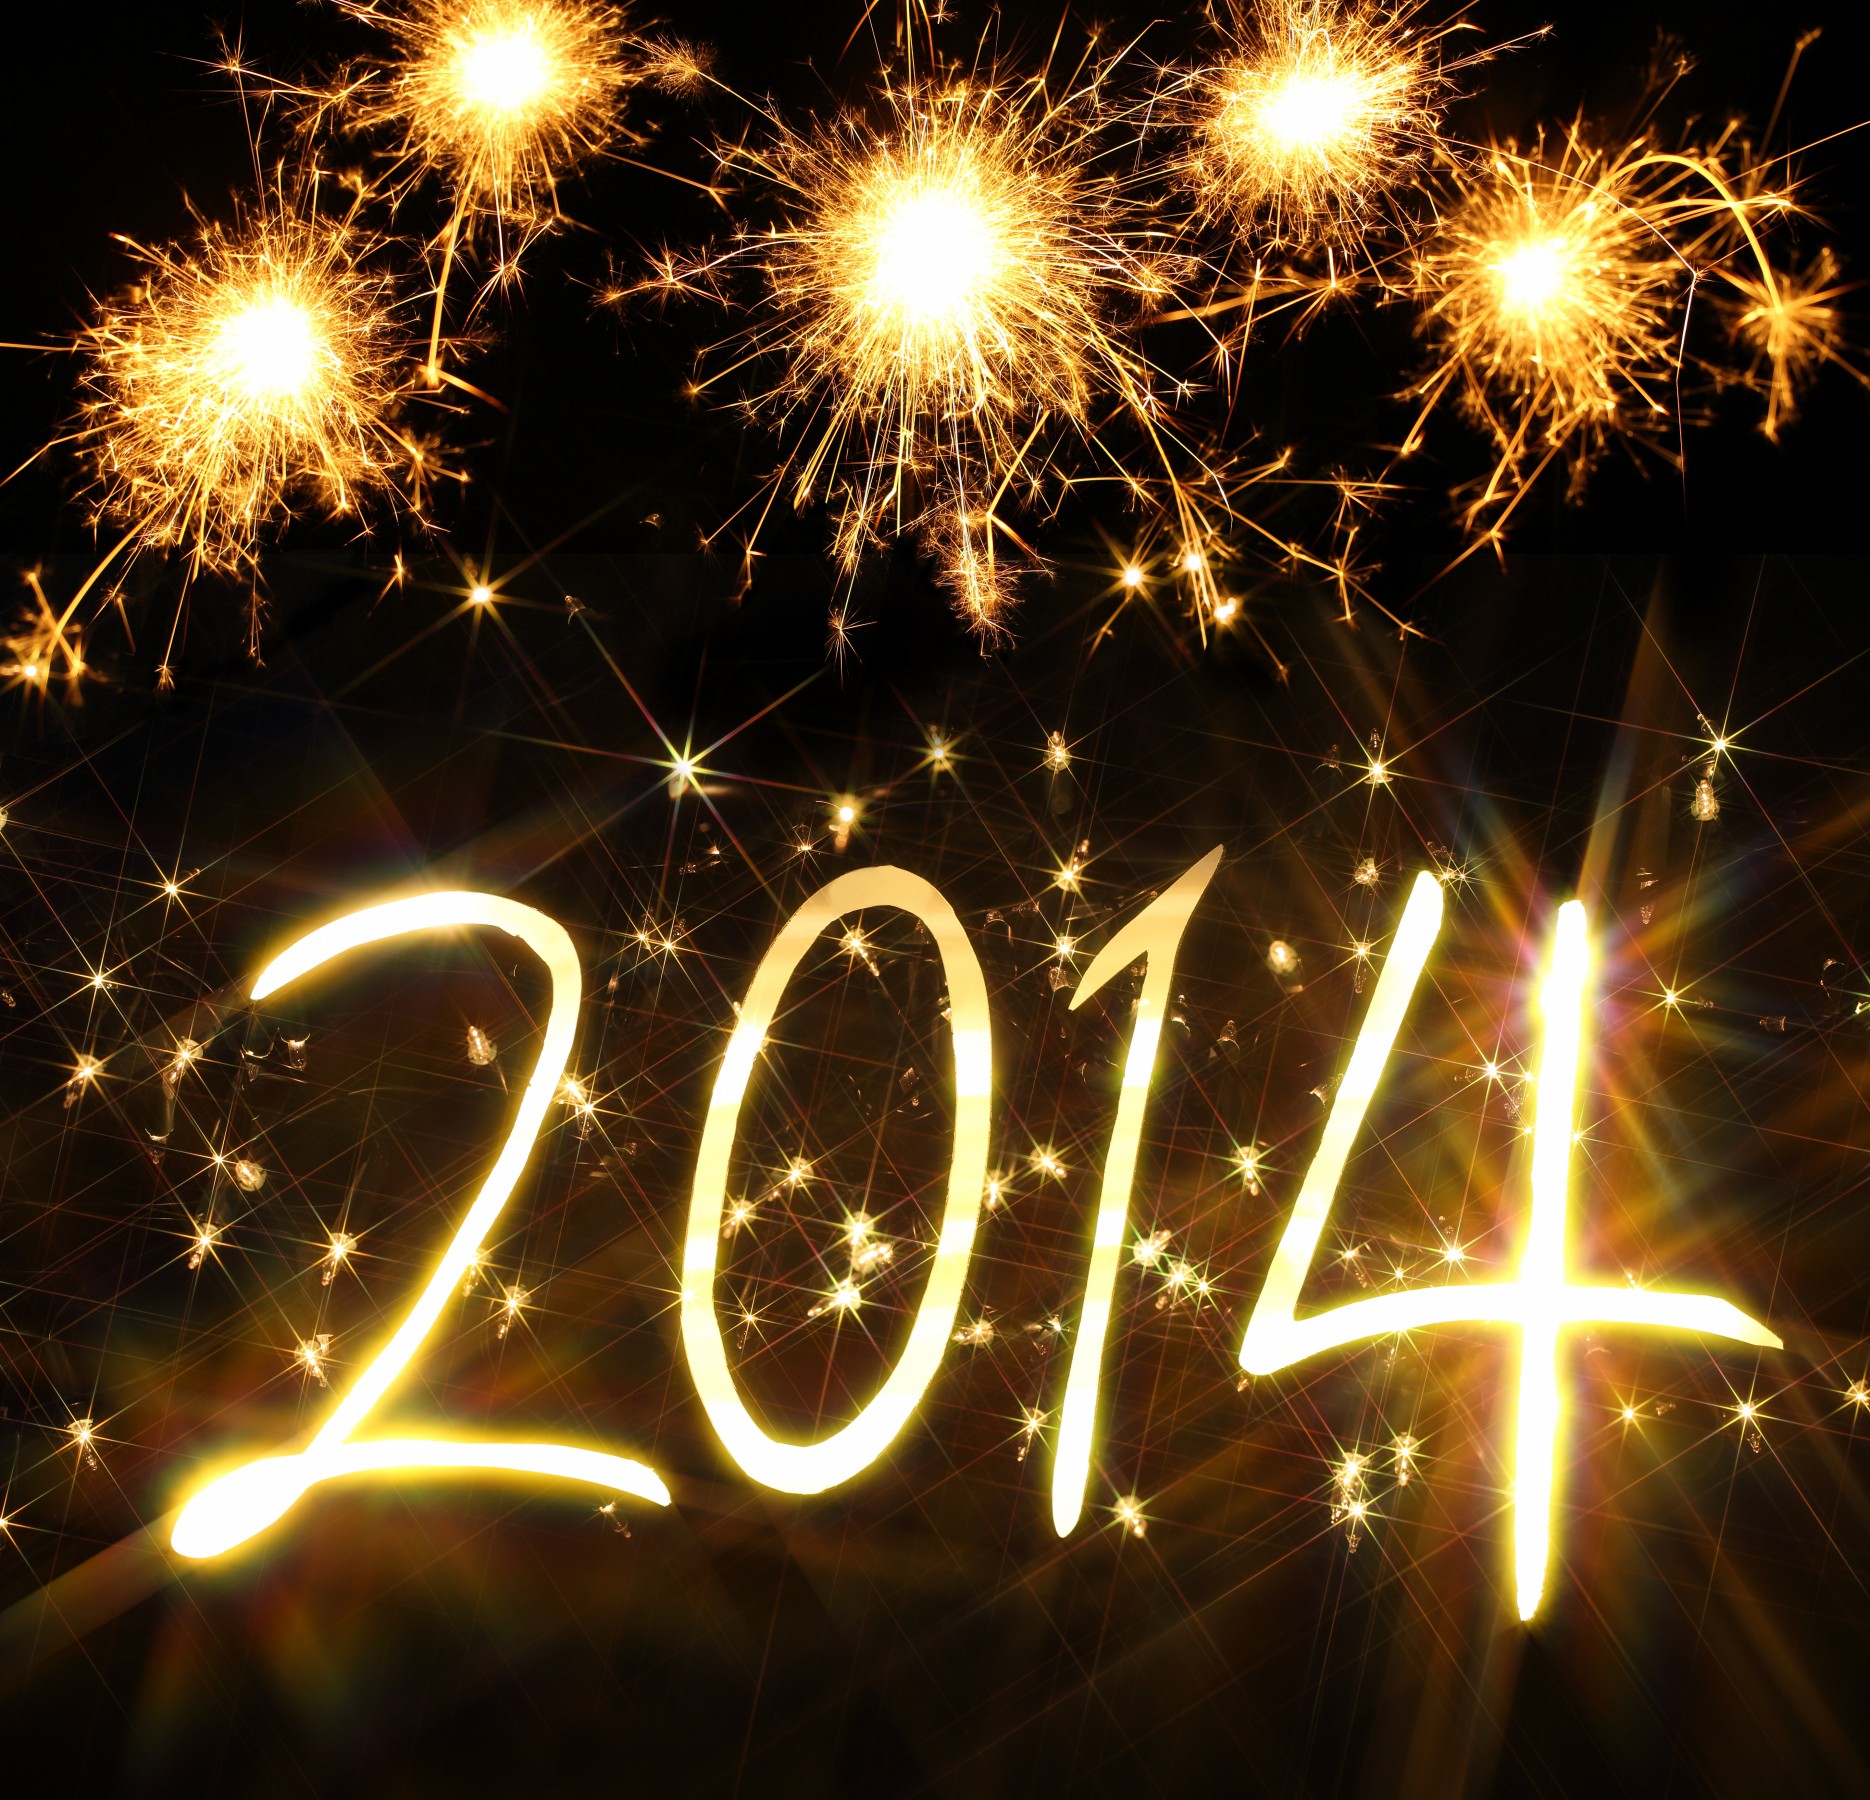 Upscale-Design-Happy-New-Year-2014-Image-5